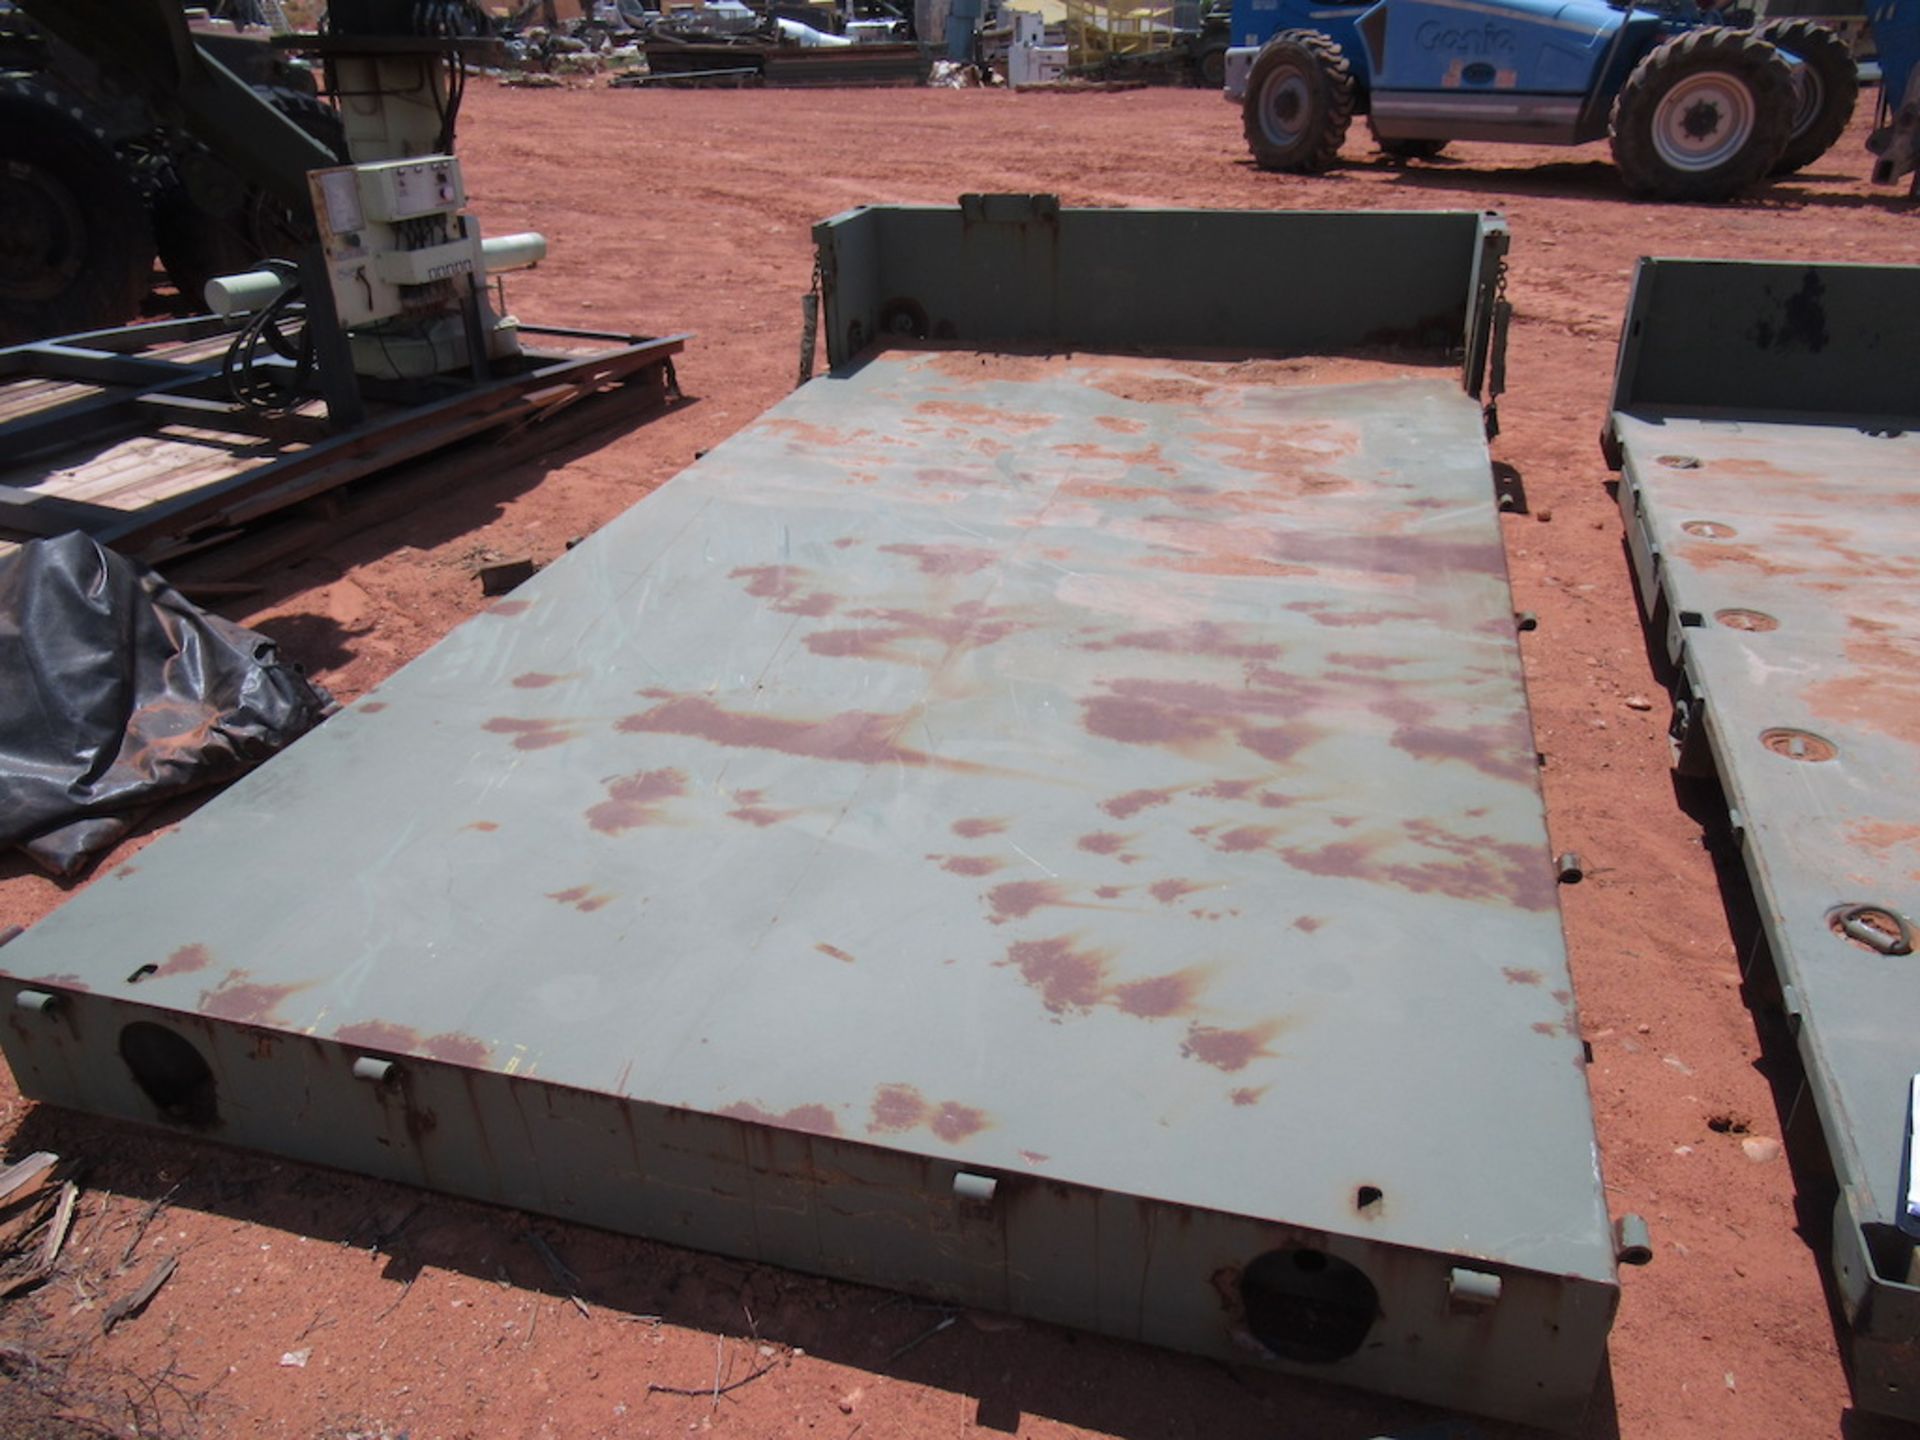 14 Fy. Steel Military Flat Bed, 1, 1964 lbs, 173"x96"x33", ISLE 1 POD 13 - Image 6 of 10